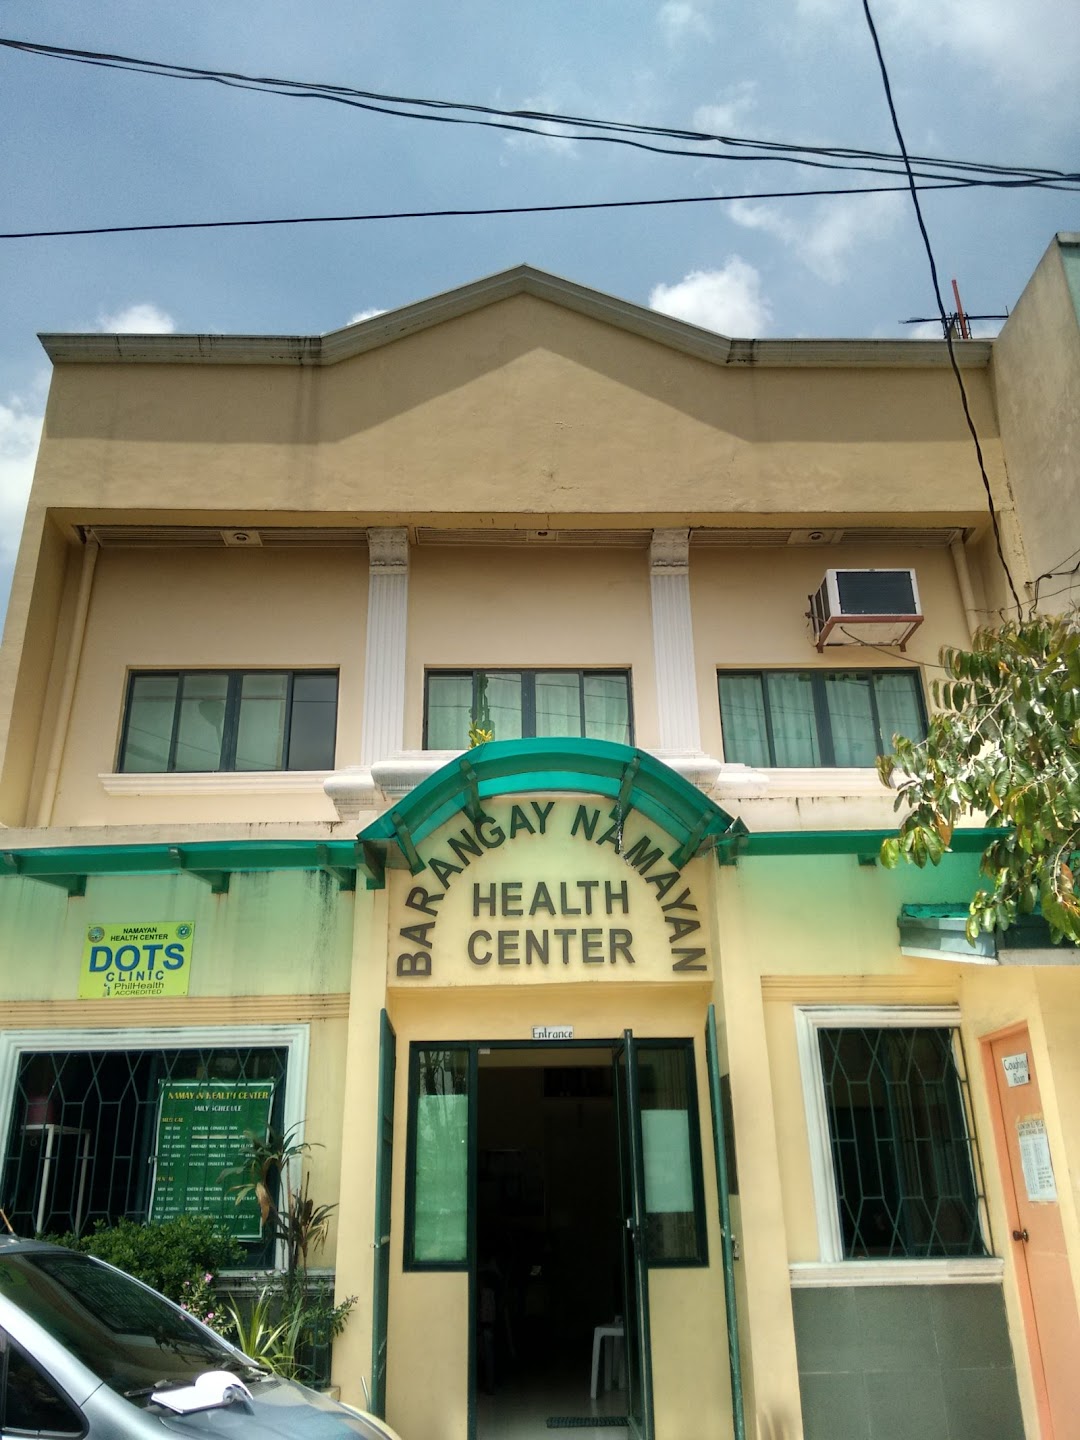 Namayan Health Center